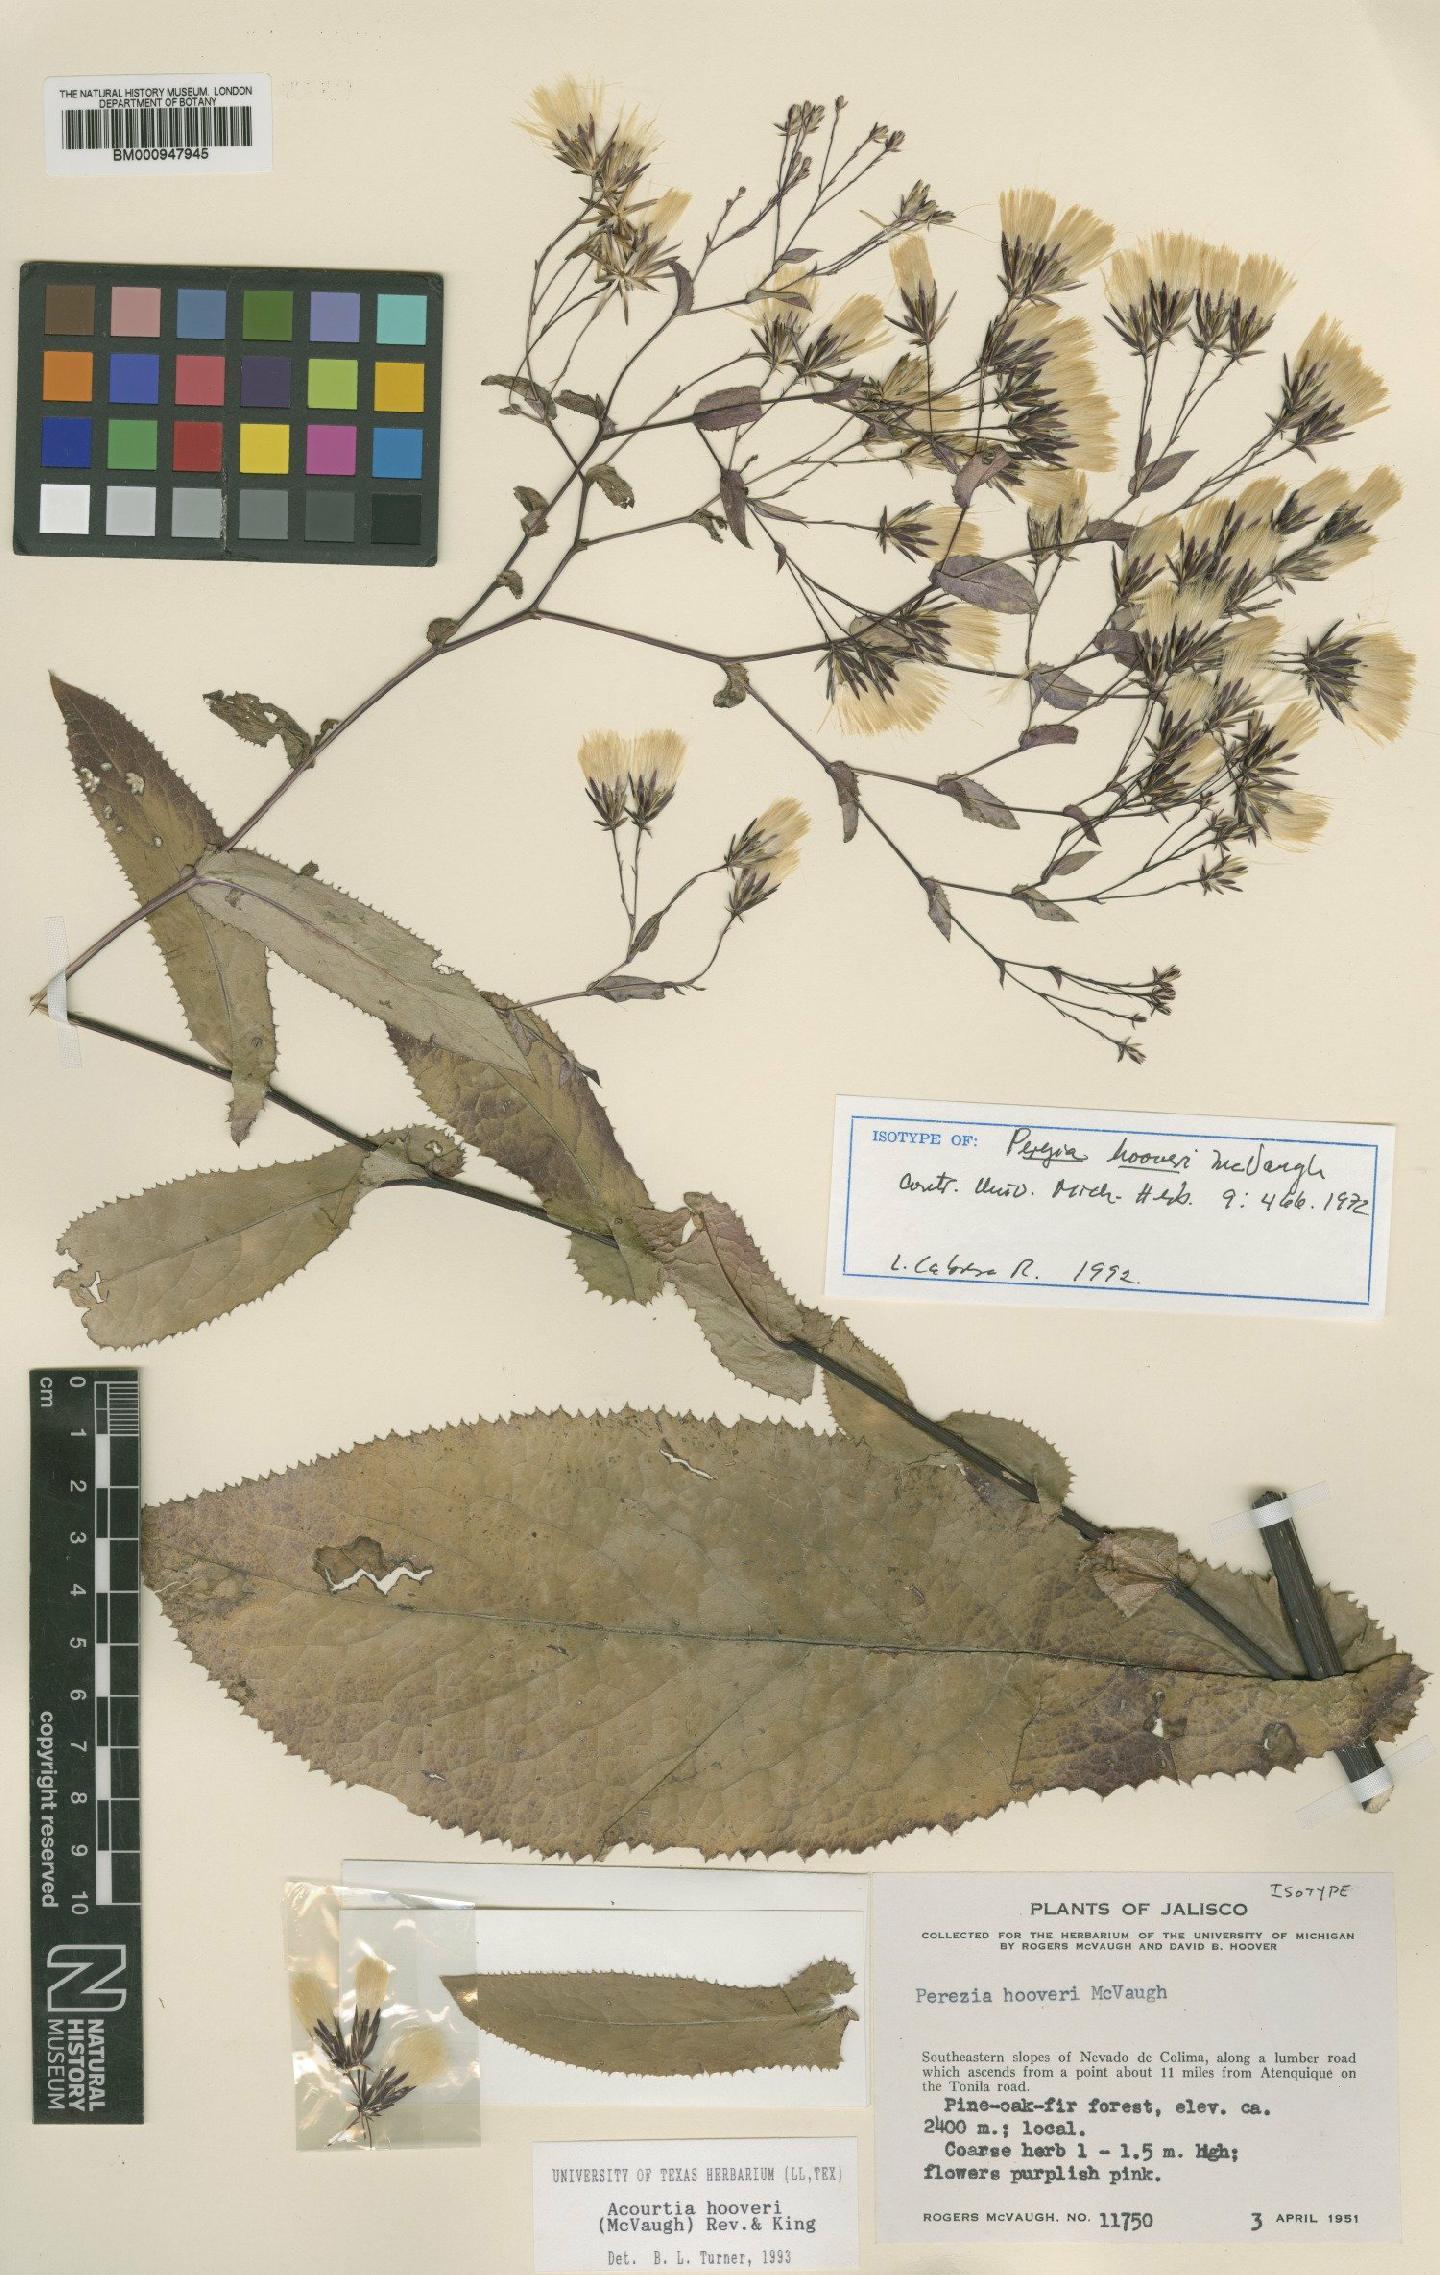 To NHMUK collection (Perezia hooveri McVaugh; Isotype; NHMUK:ecatalogue:620257)